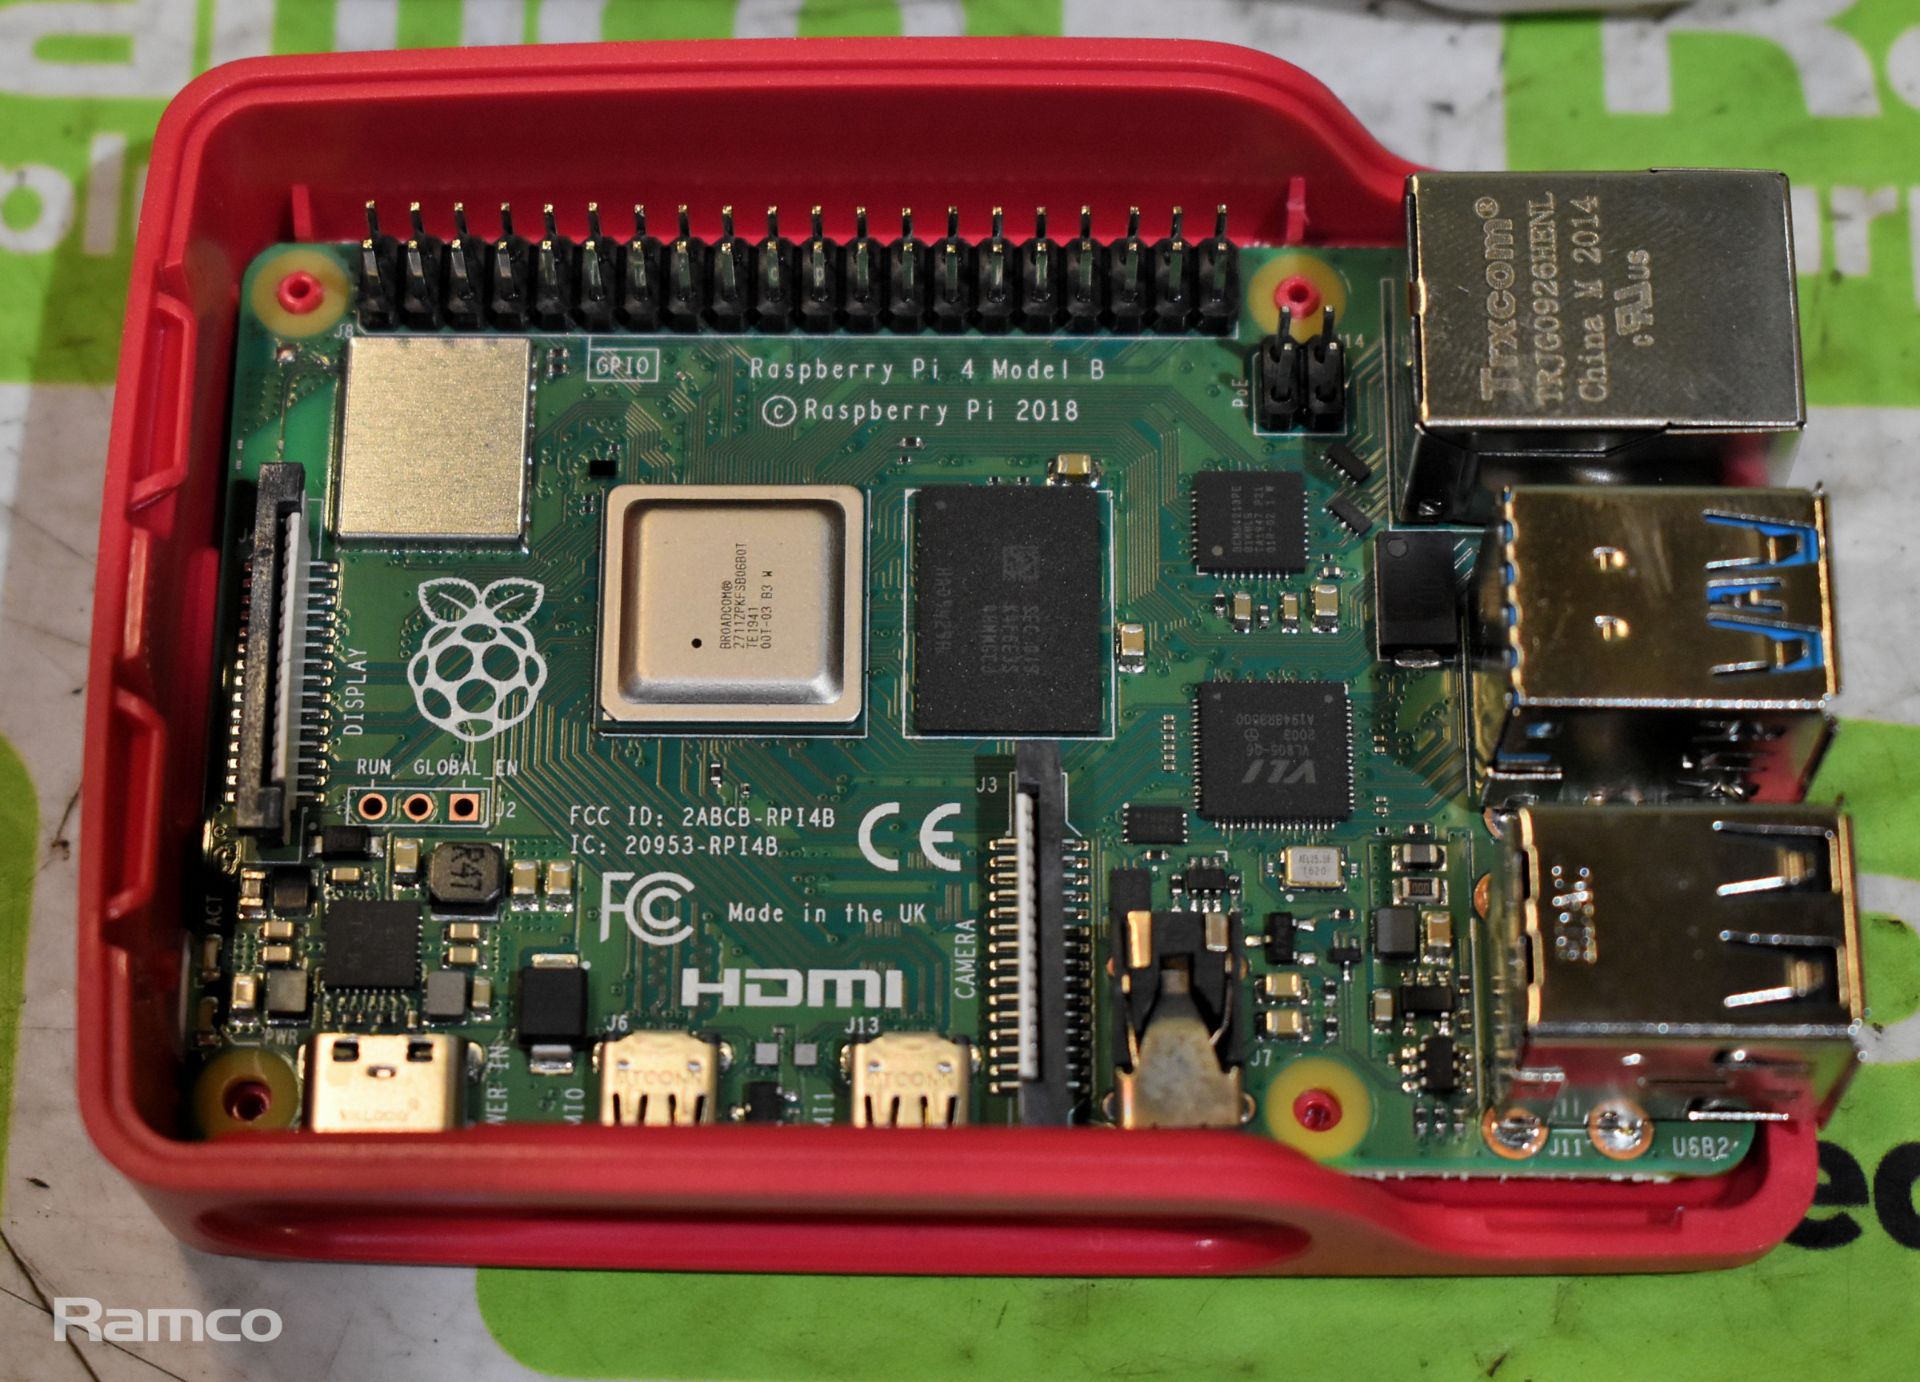 5x Raspberry Pi 4 Model B starter kits (Raspberry Pi 4, case, Micro-HDMI cable, USB-C power supply)